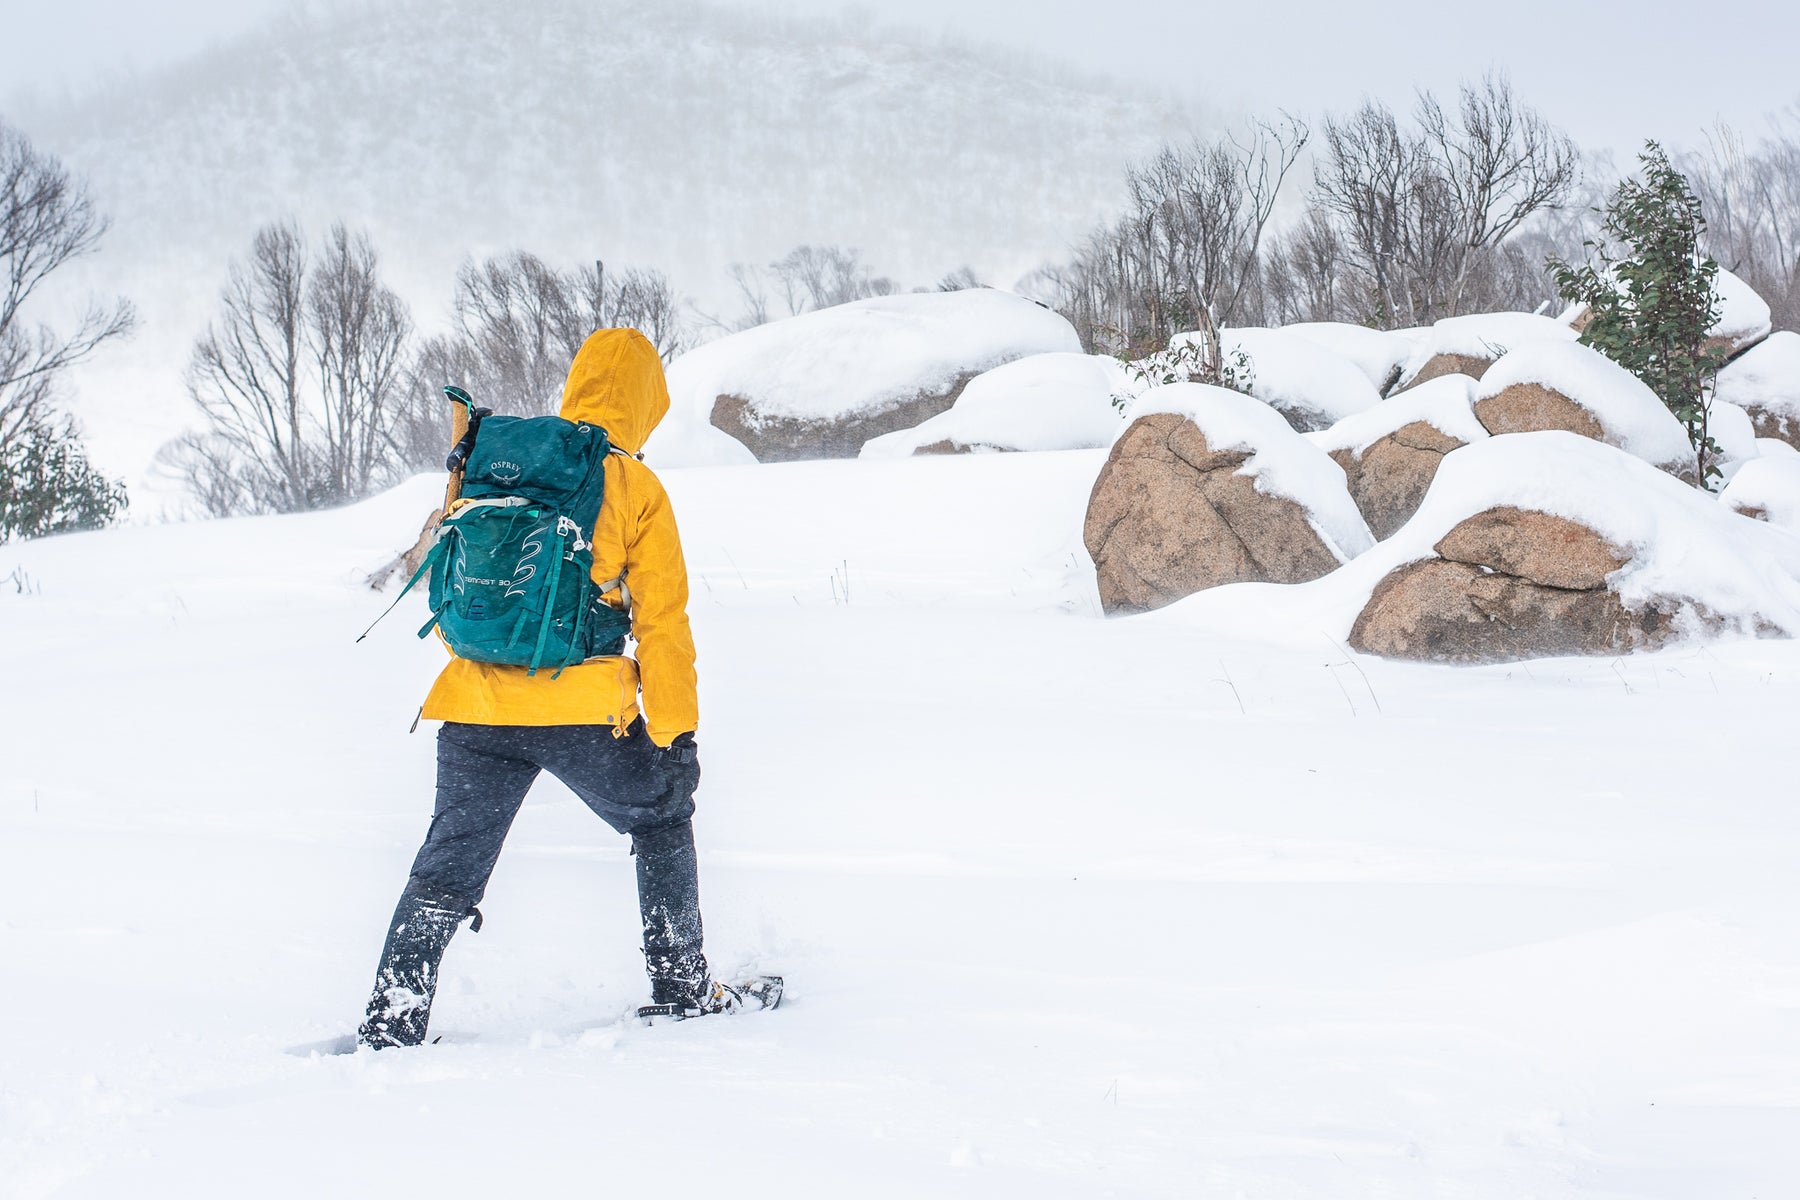 Chloe snowshoeing near Sawyers Hut in Kosciuszko National Park